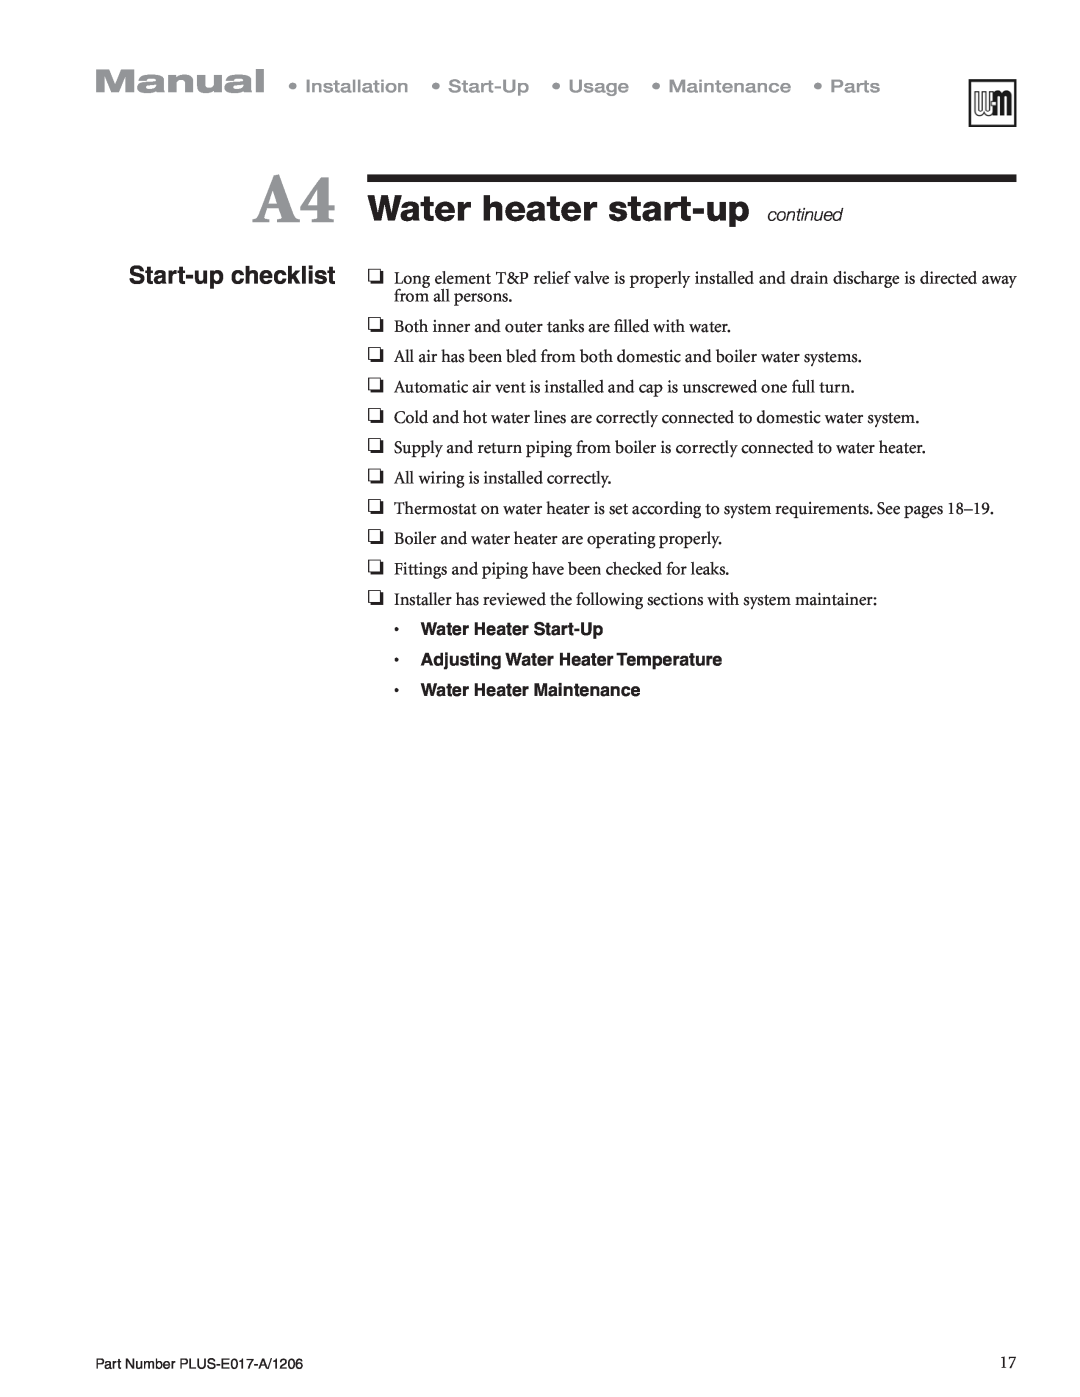 Weil-McLain PLUS-E017-A/1206 A4 Water heater start-up continued, Water Heater Start-Up, Adjusting Water Heater Temperature 